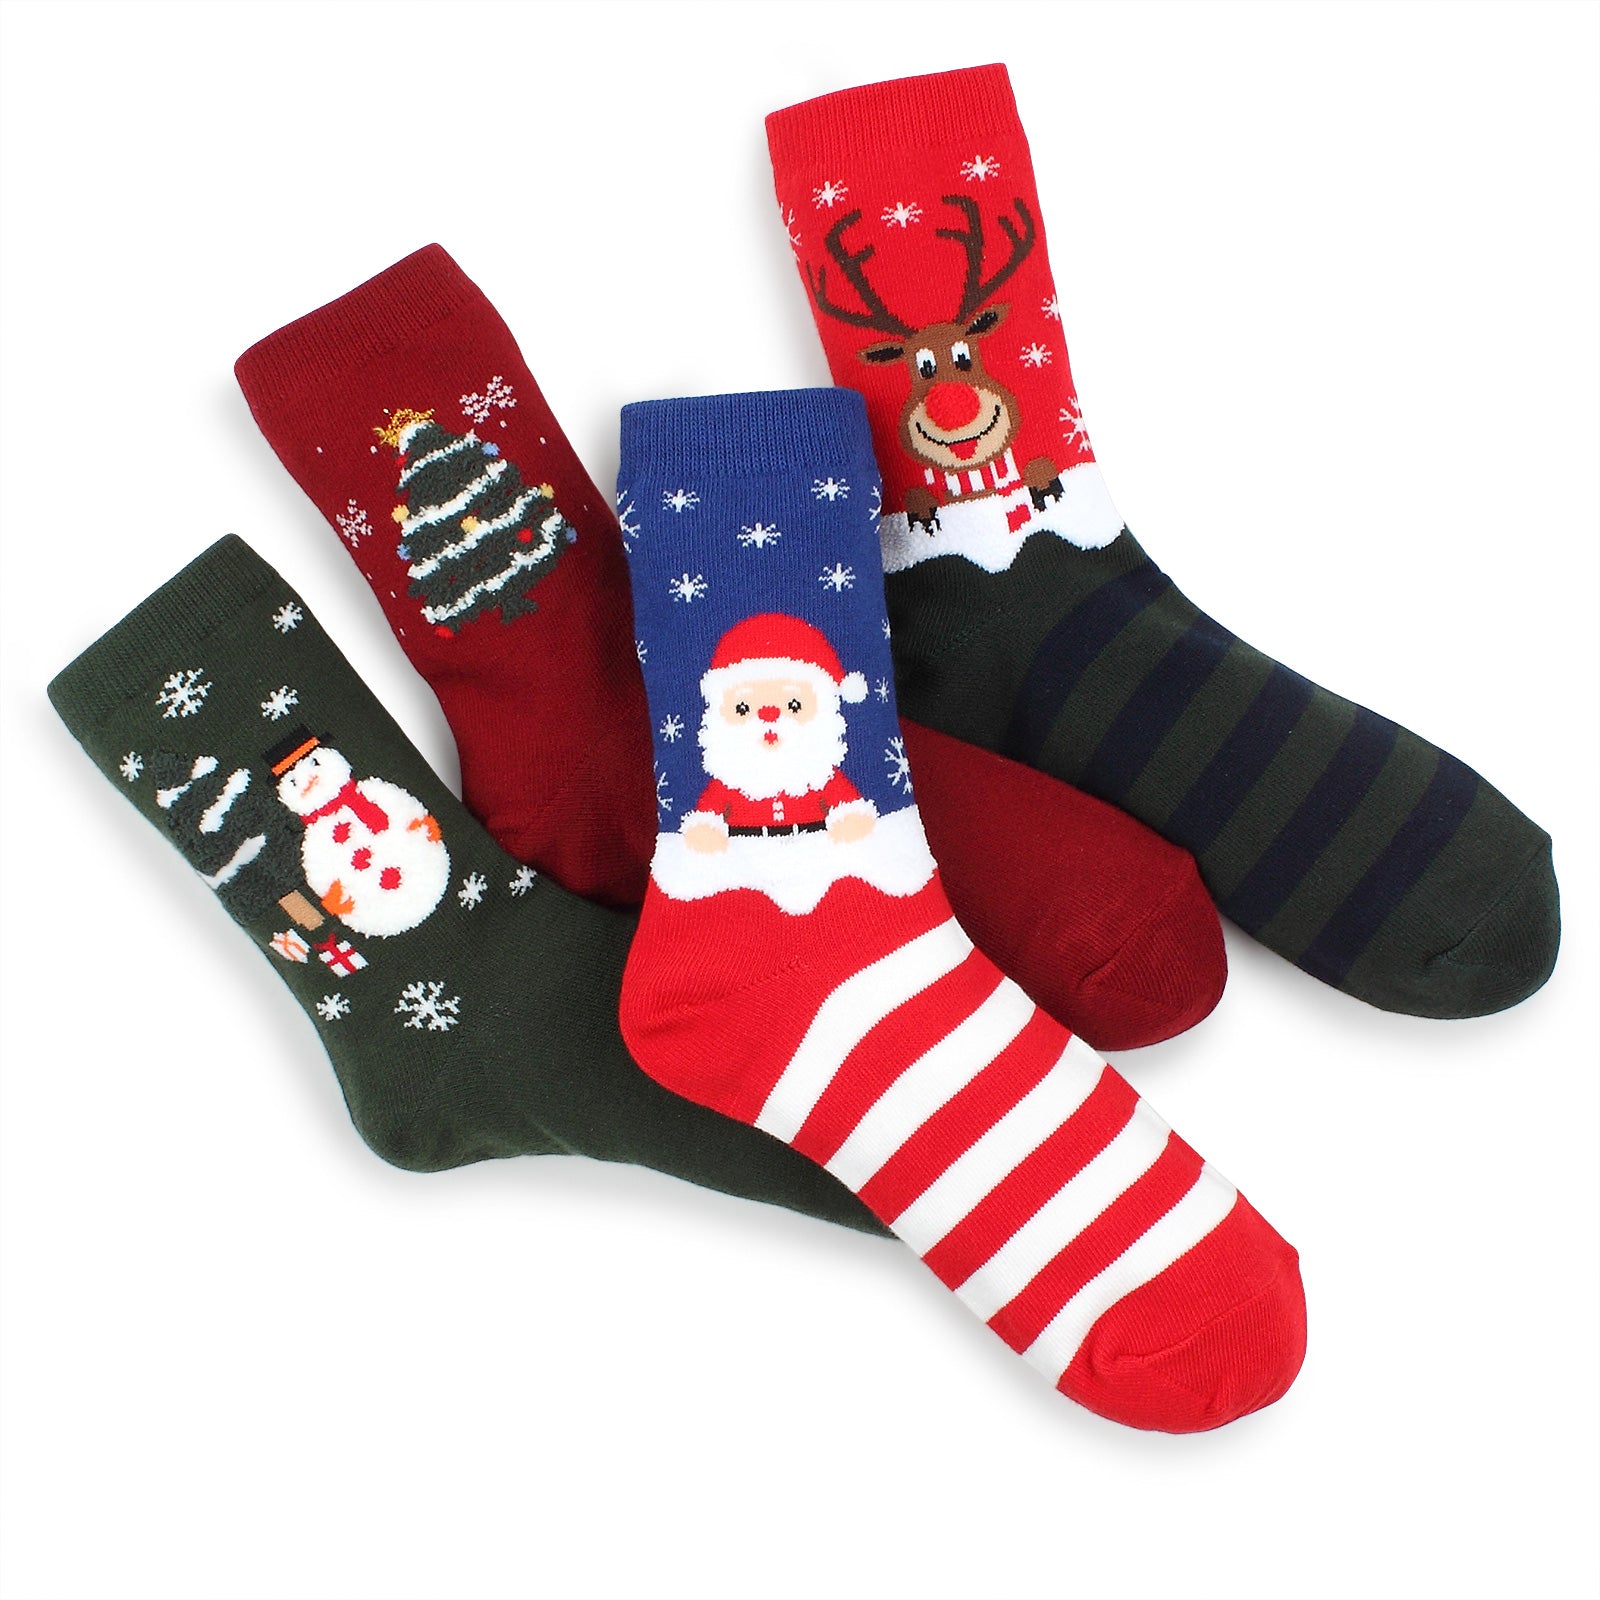 (4 Pairs) Merry Christmas pattern Fuzzy women's socks SR14 - intypesocks